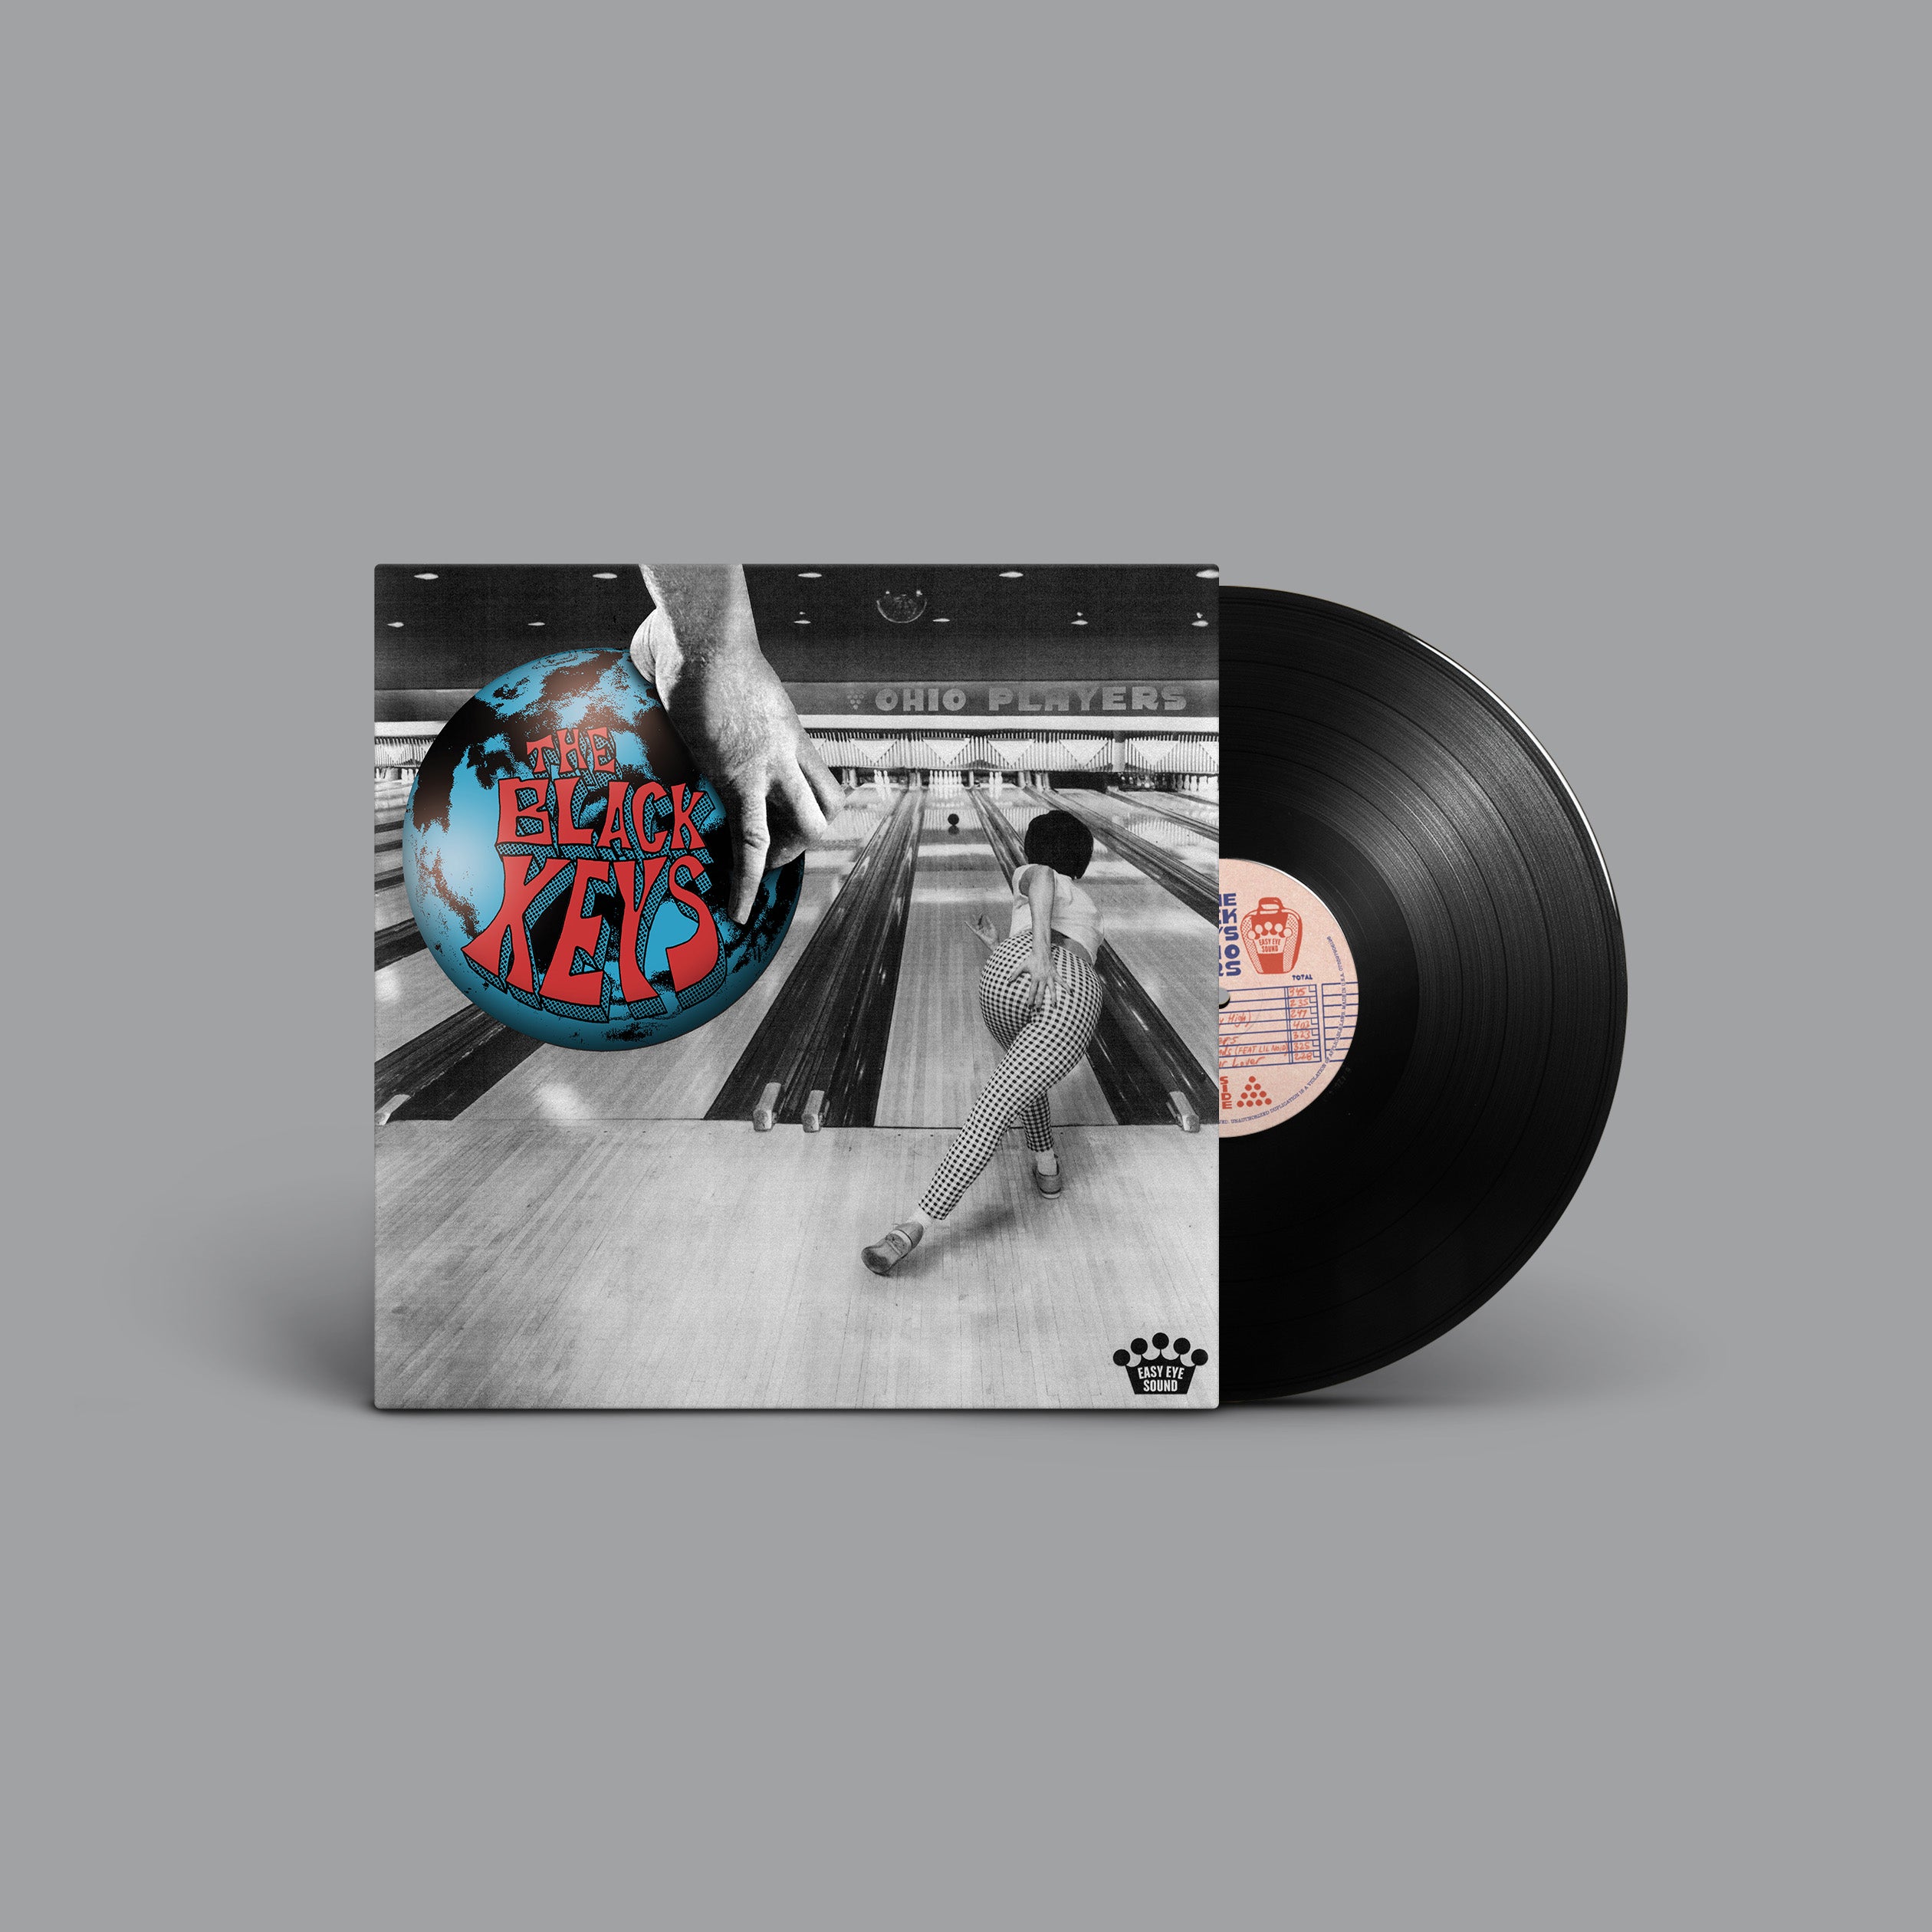 The Black Keys - Ohio Players: Vinyl LP